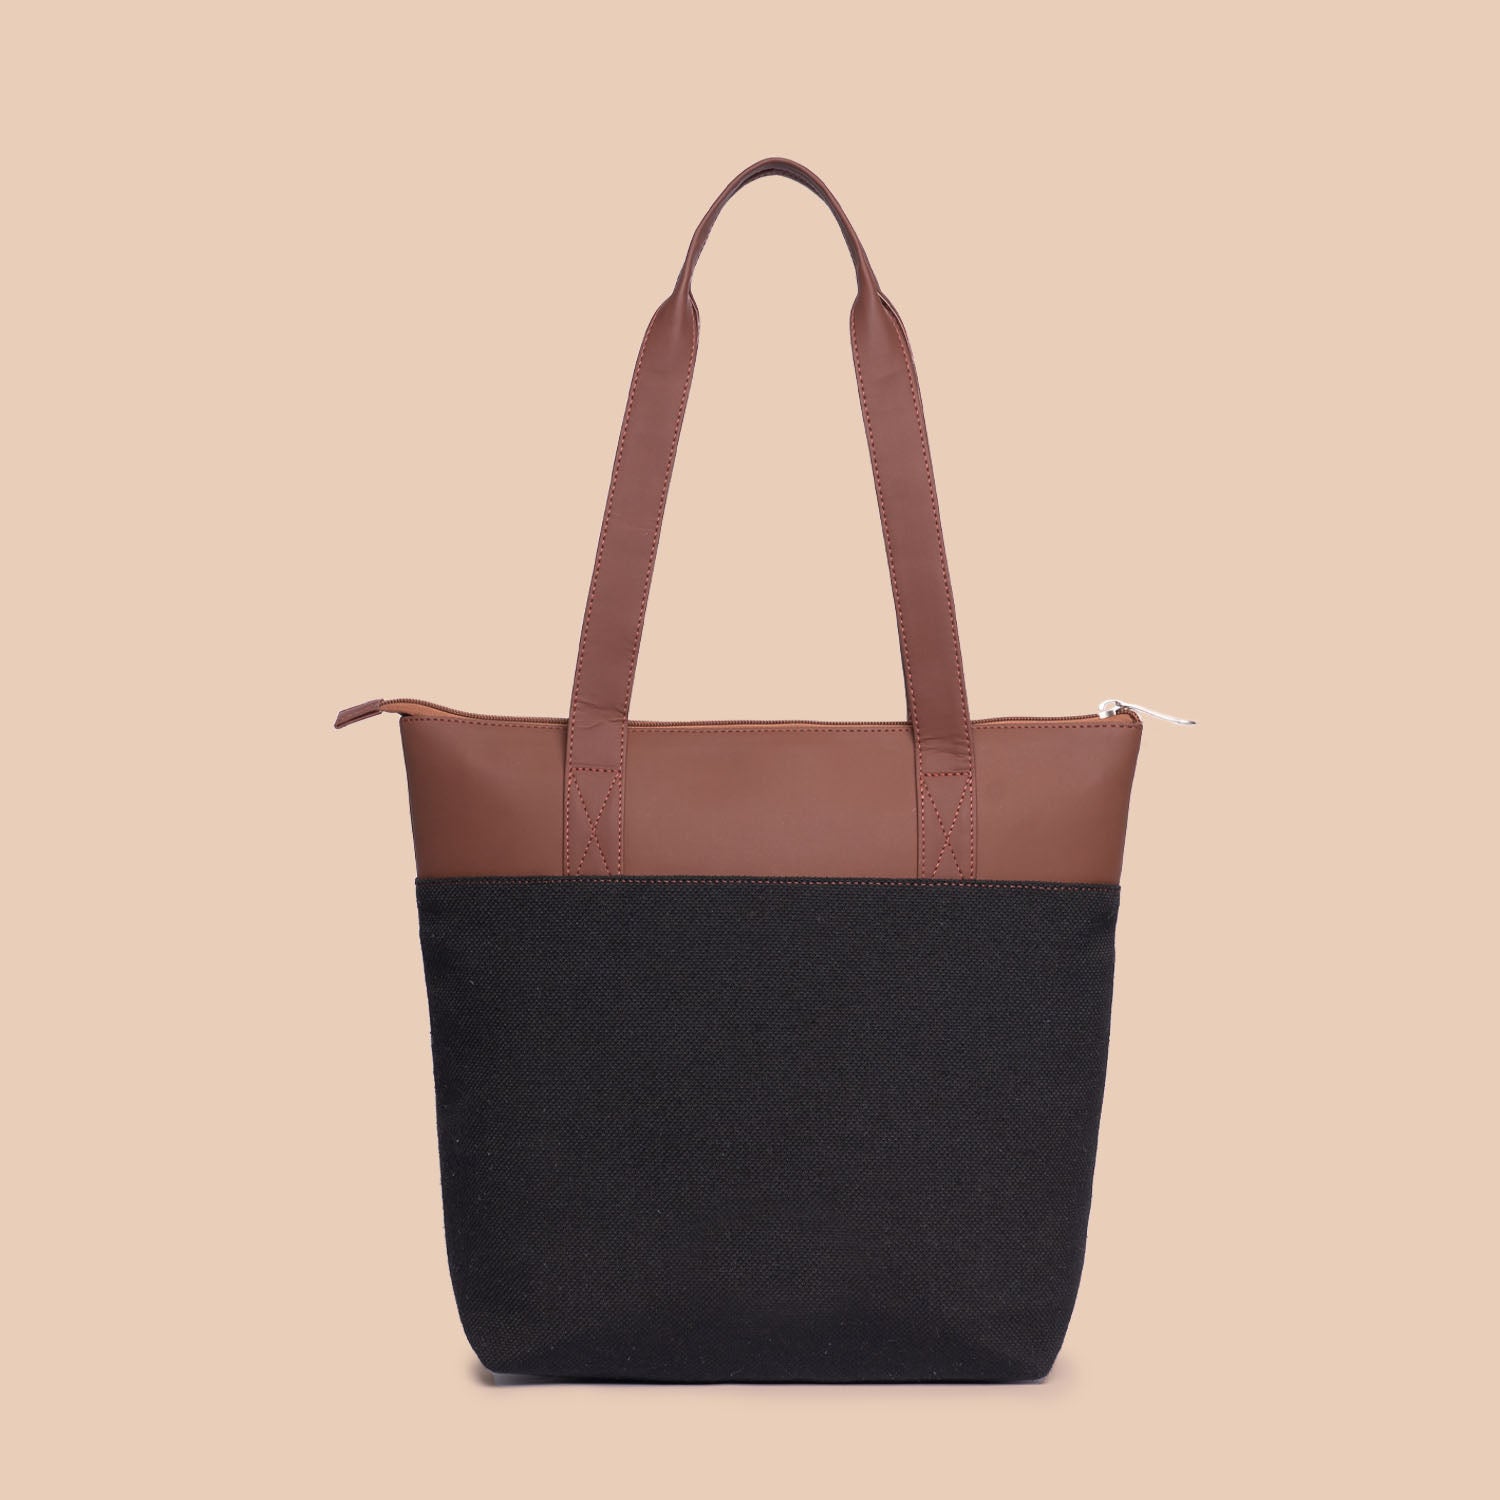 Lattice Lace & Jet Black - Women's Office Bag & Everyday Tote Bag Combo